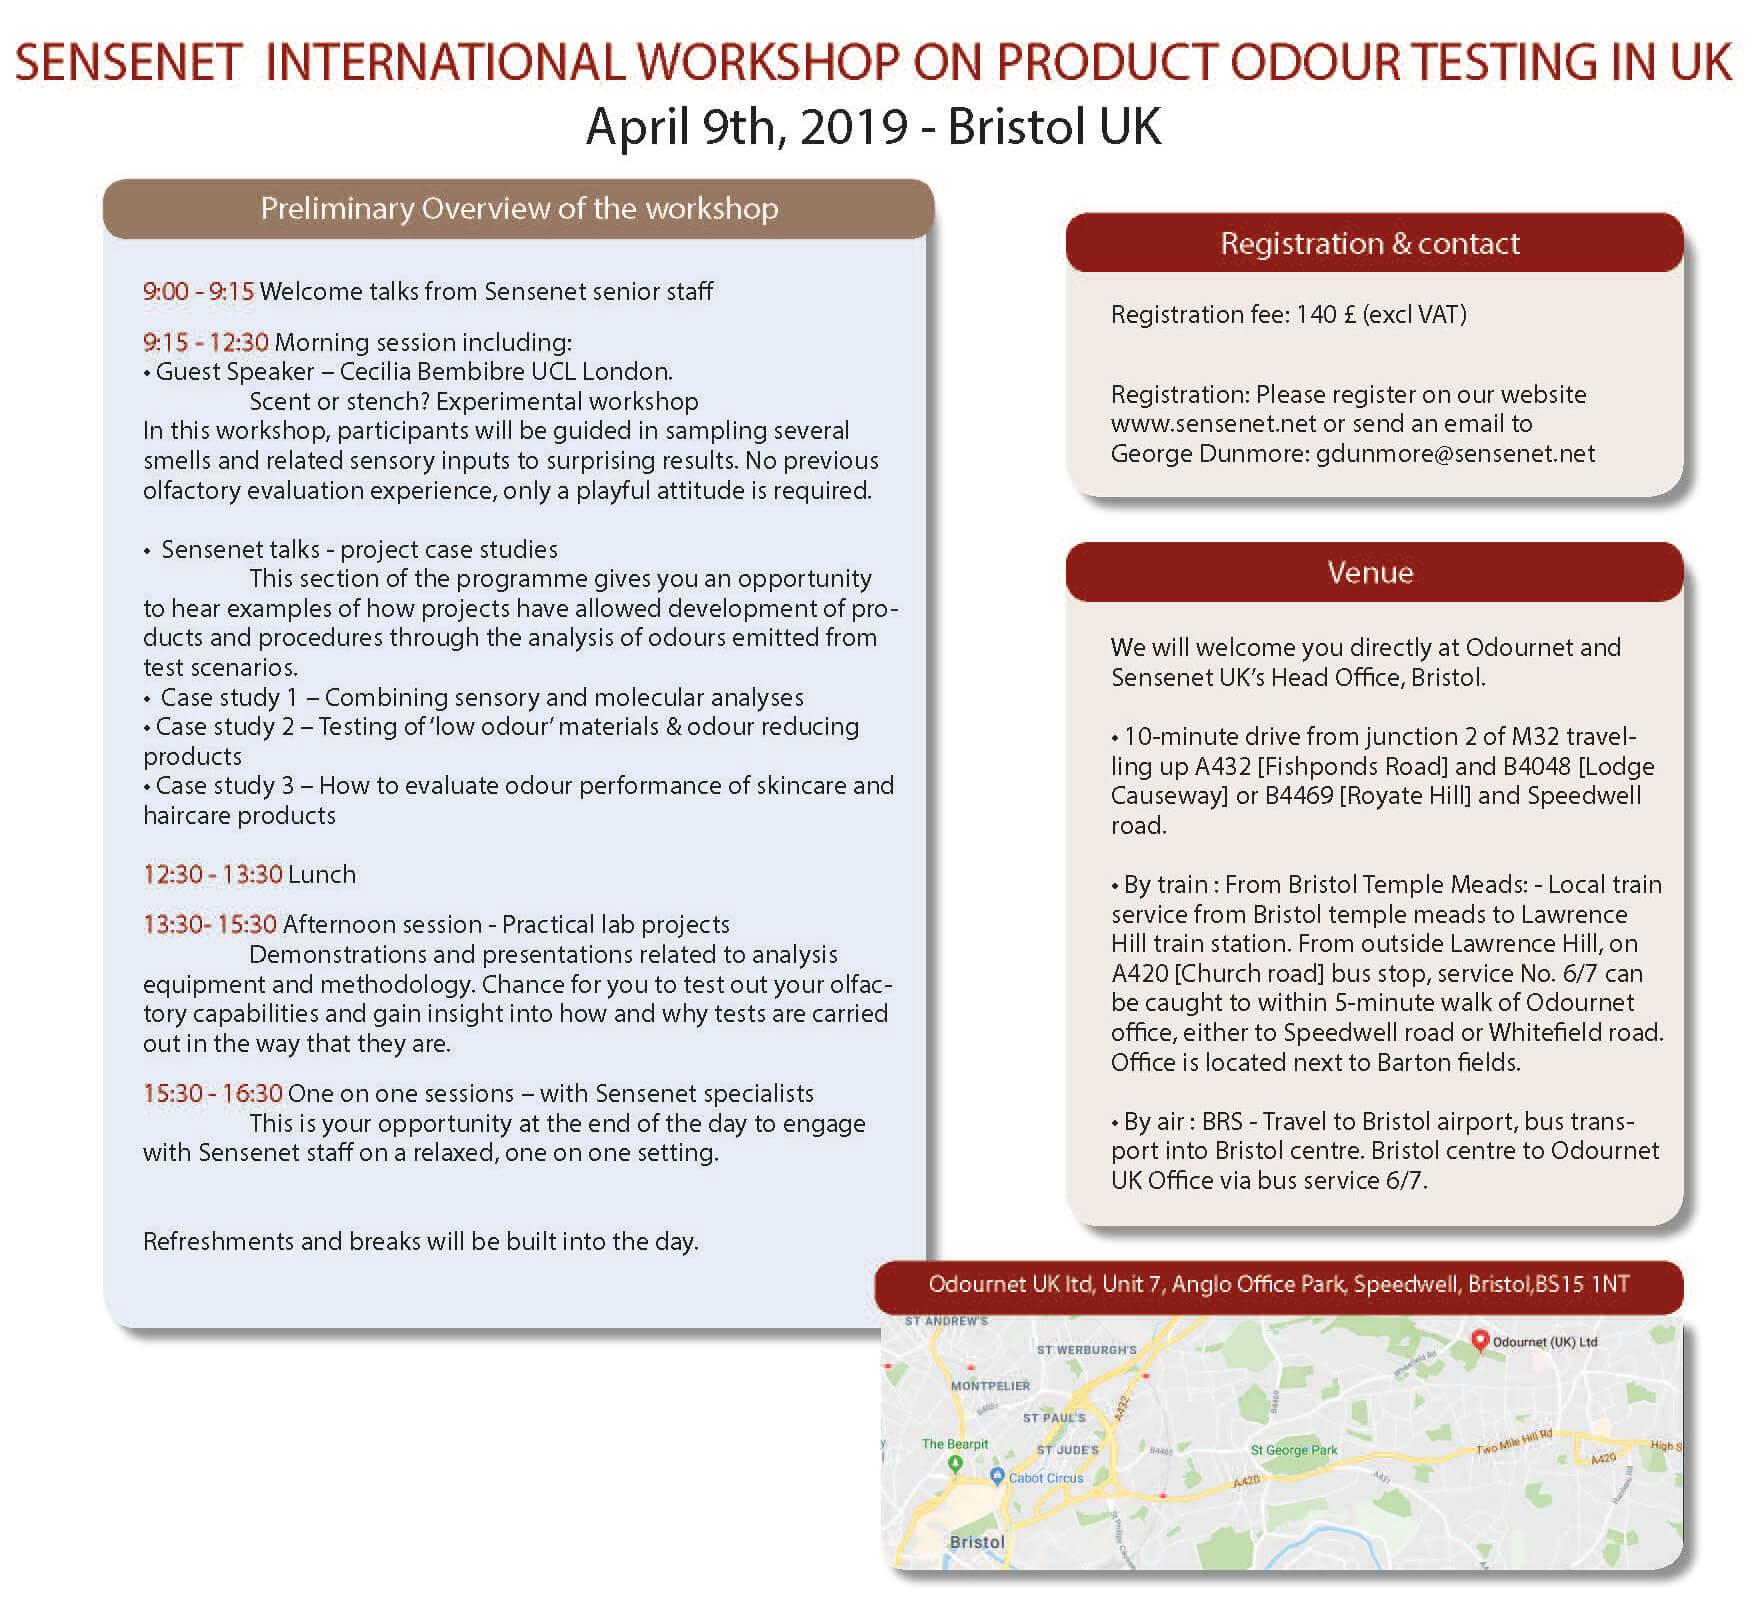 Product Product Odour Testing Workshop Bristol UK, April 9th, 2019 - Sensenet image